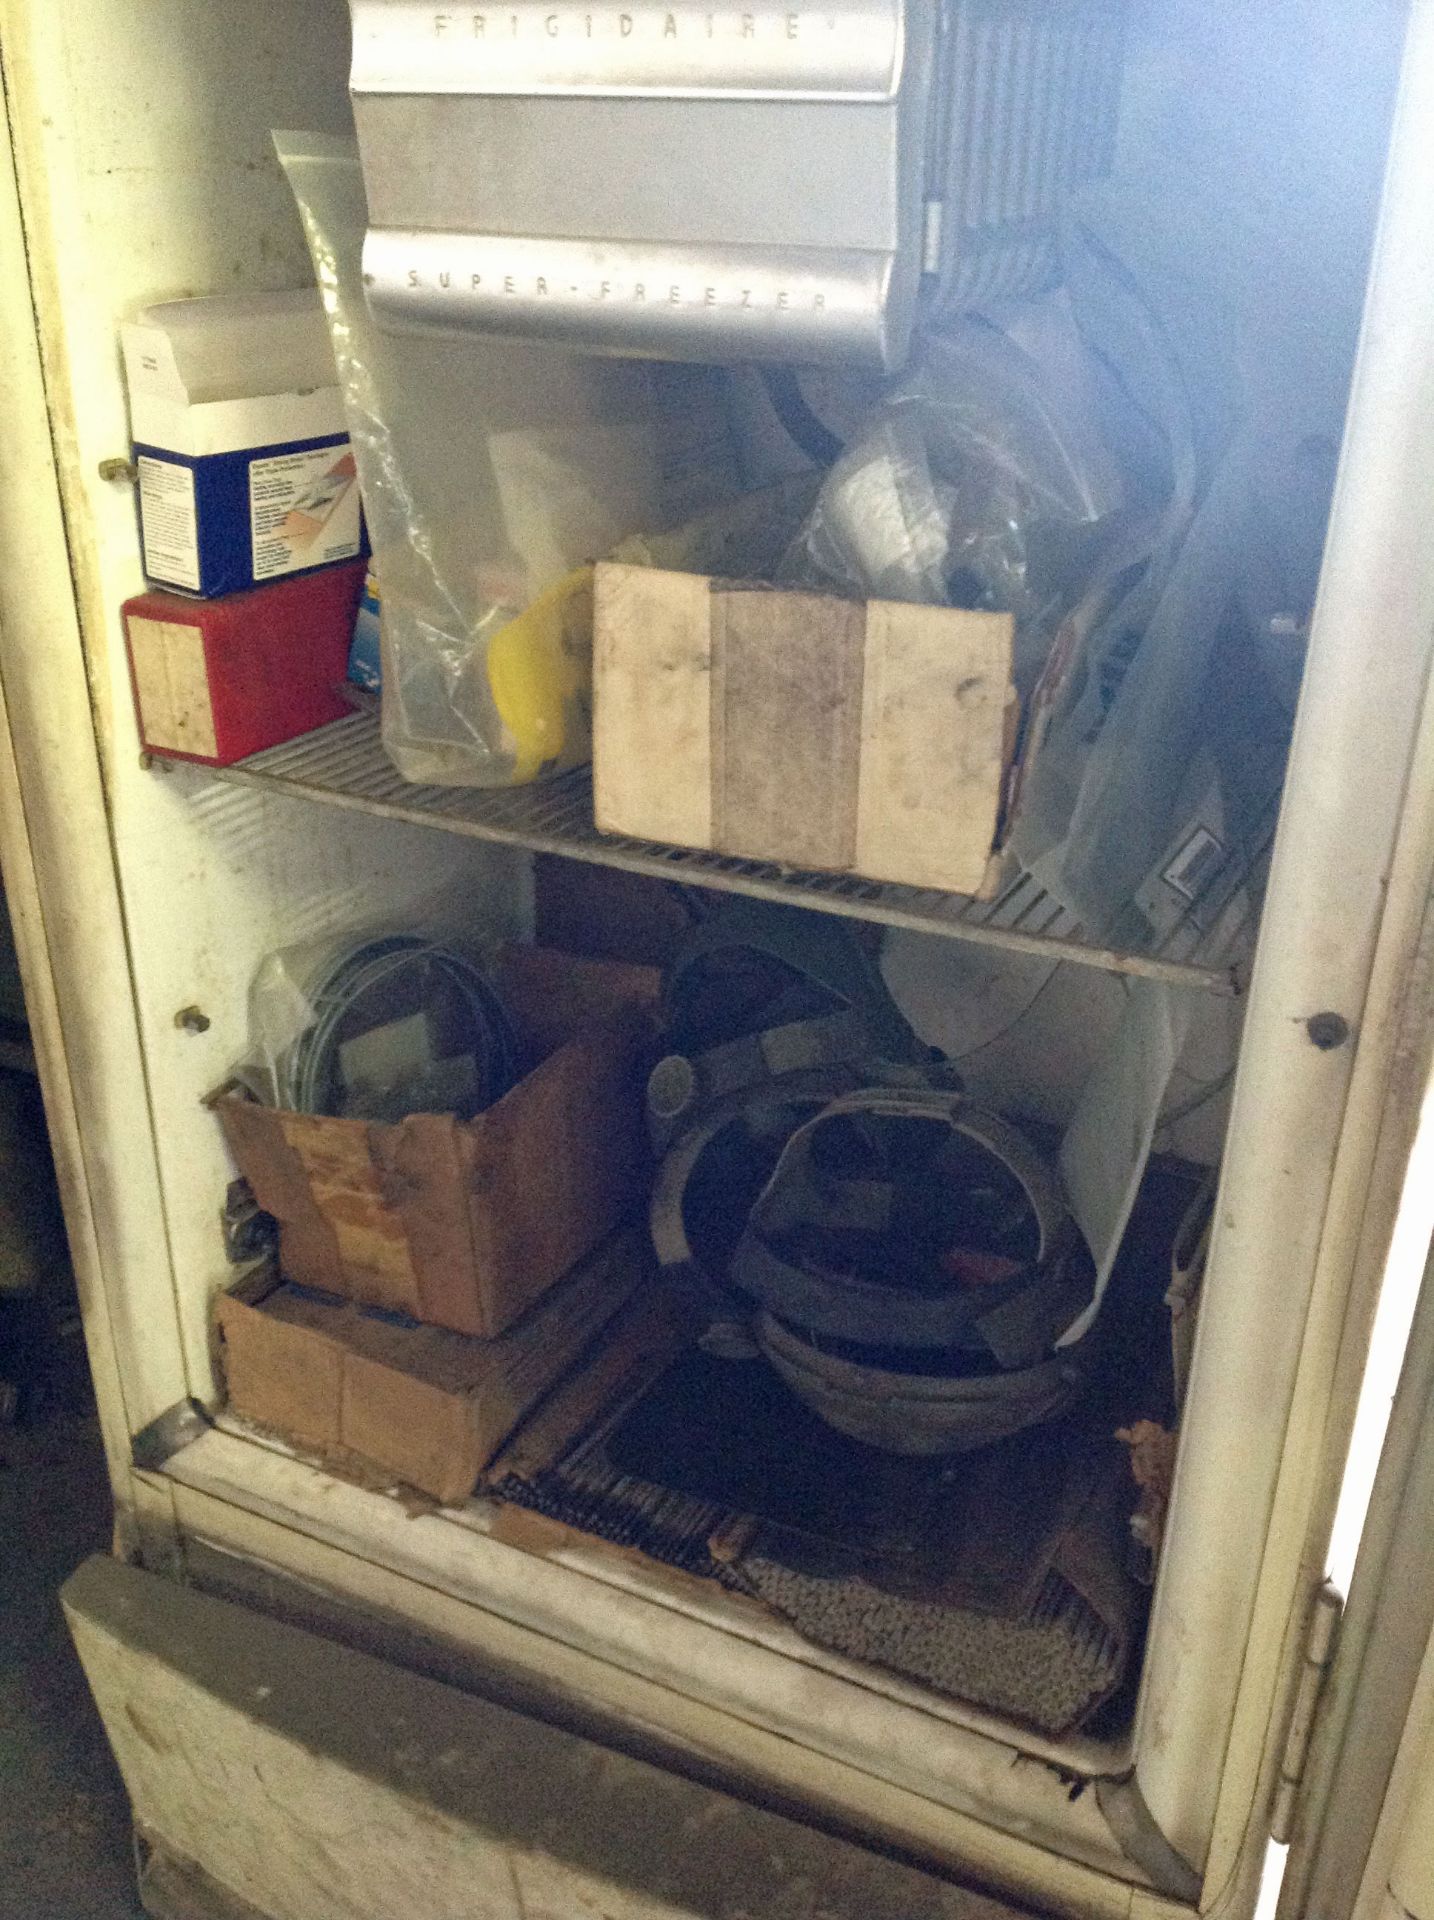 Refrigerator, Welding Rods & Contents